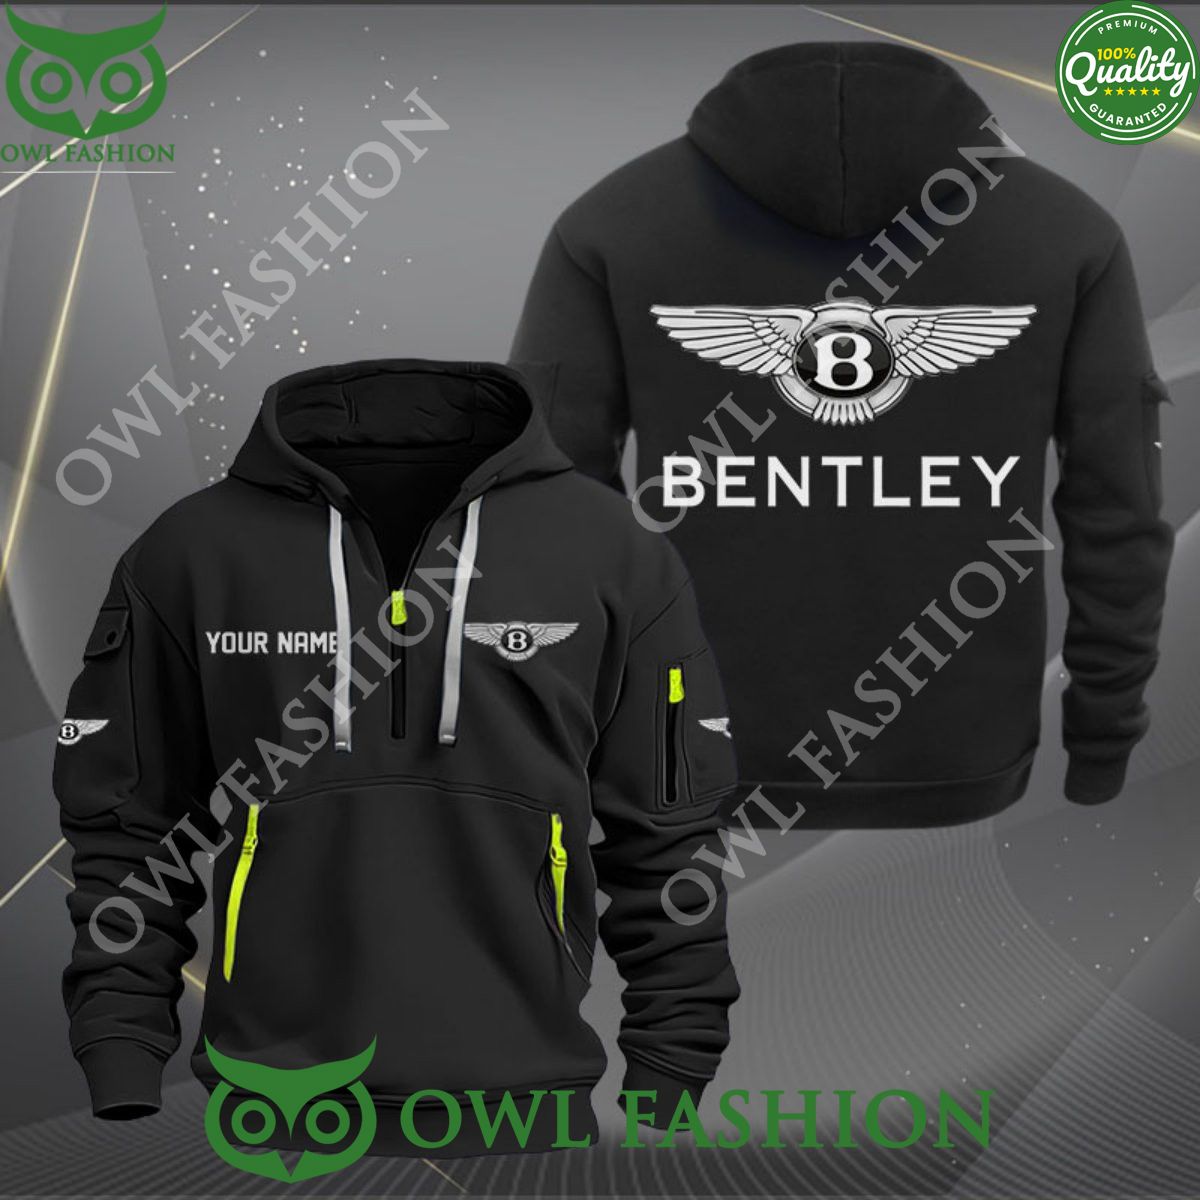 bentley automobile brand personalized 2d half zipper hoodie 1 4b25c.jpg